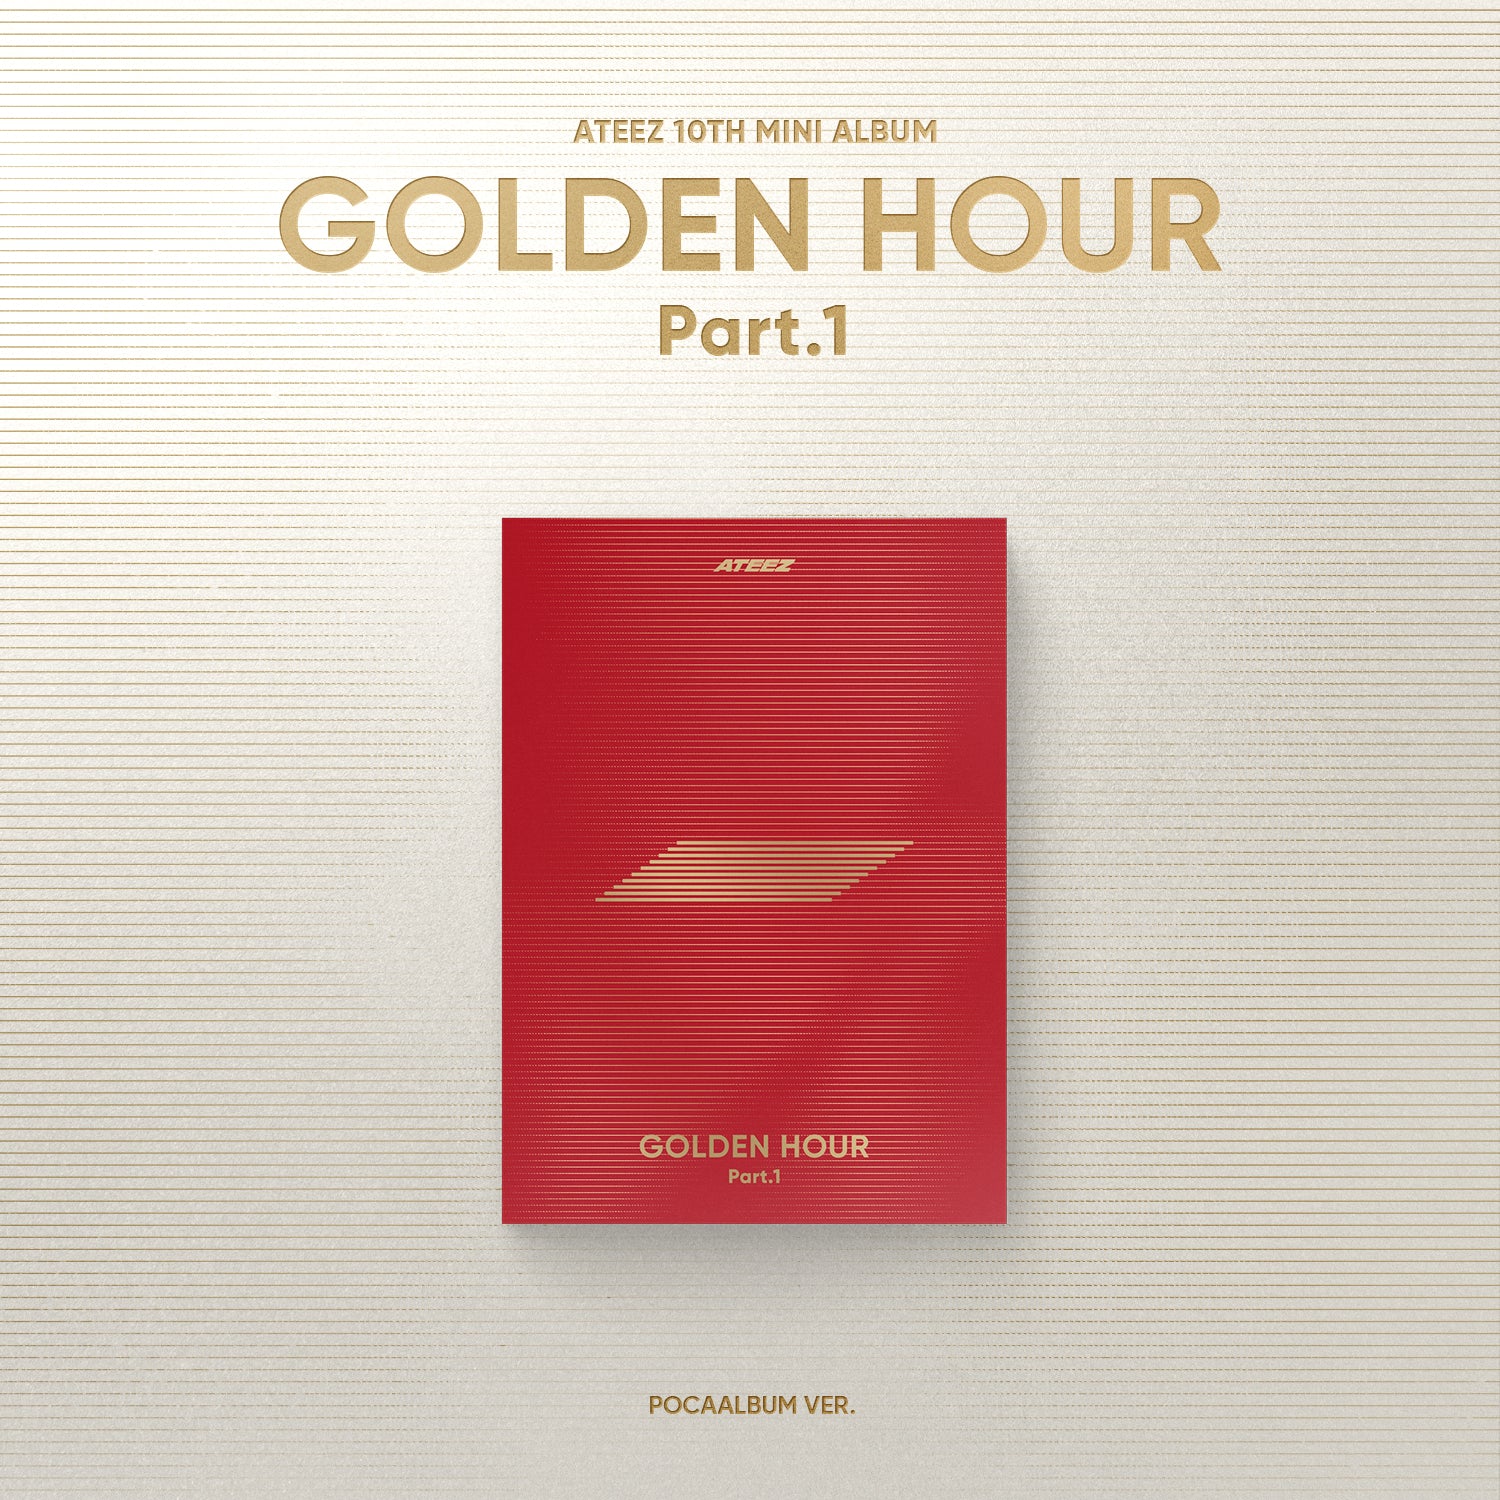 [PRE-ORDER] ATEEZ- 10th Mini Album GOLDEN HOUR : Part.1 (POCAALBUM VER.)